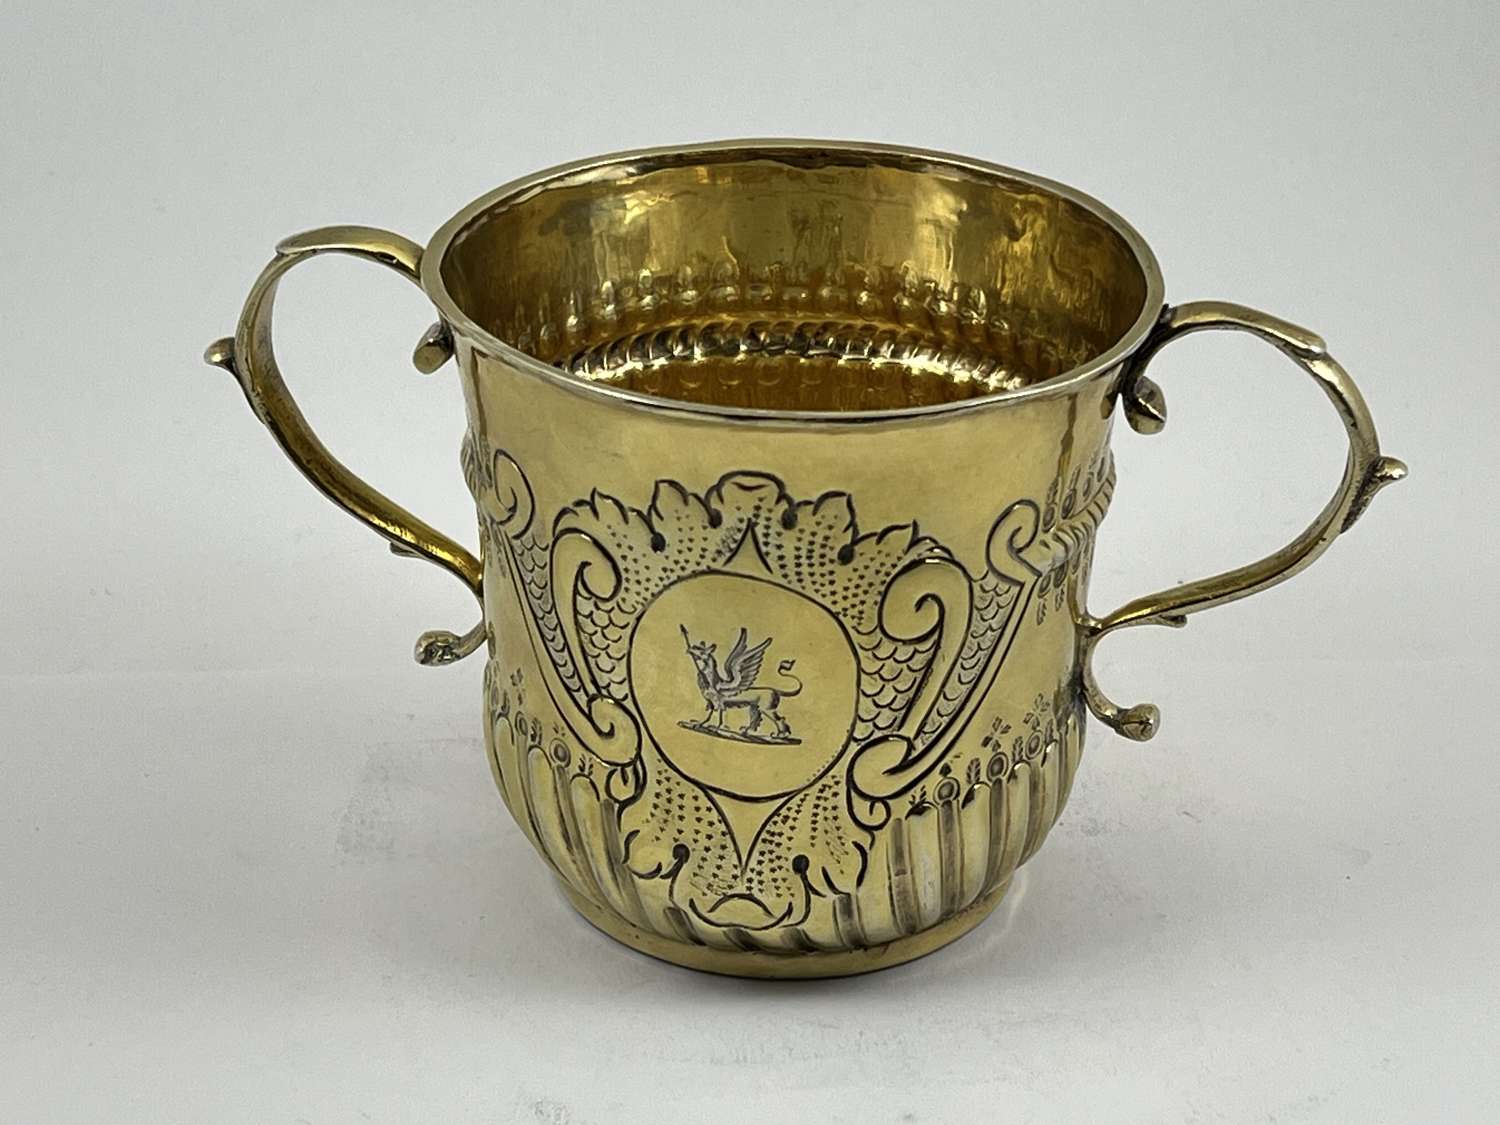 Queen Anne antique silver gilt porringer, London 1712 by Timothy Ley